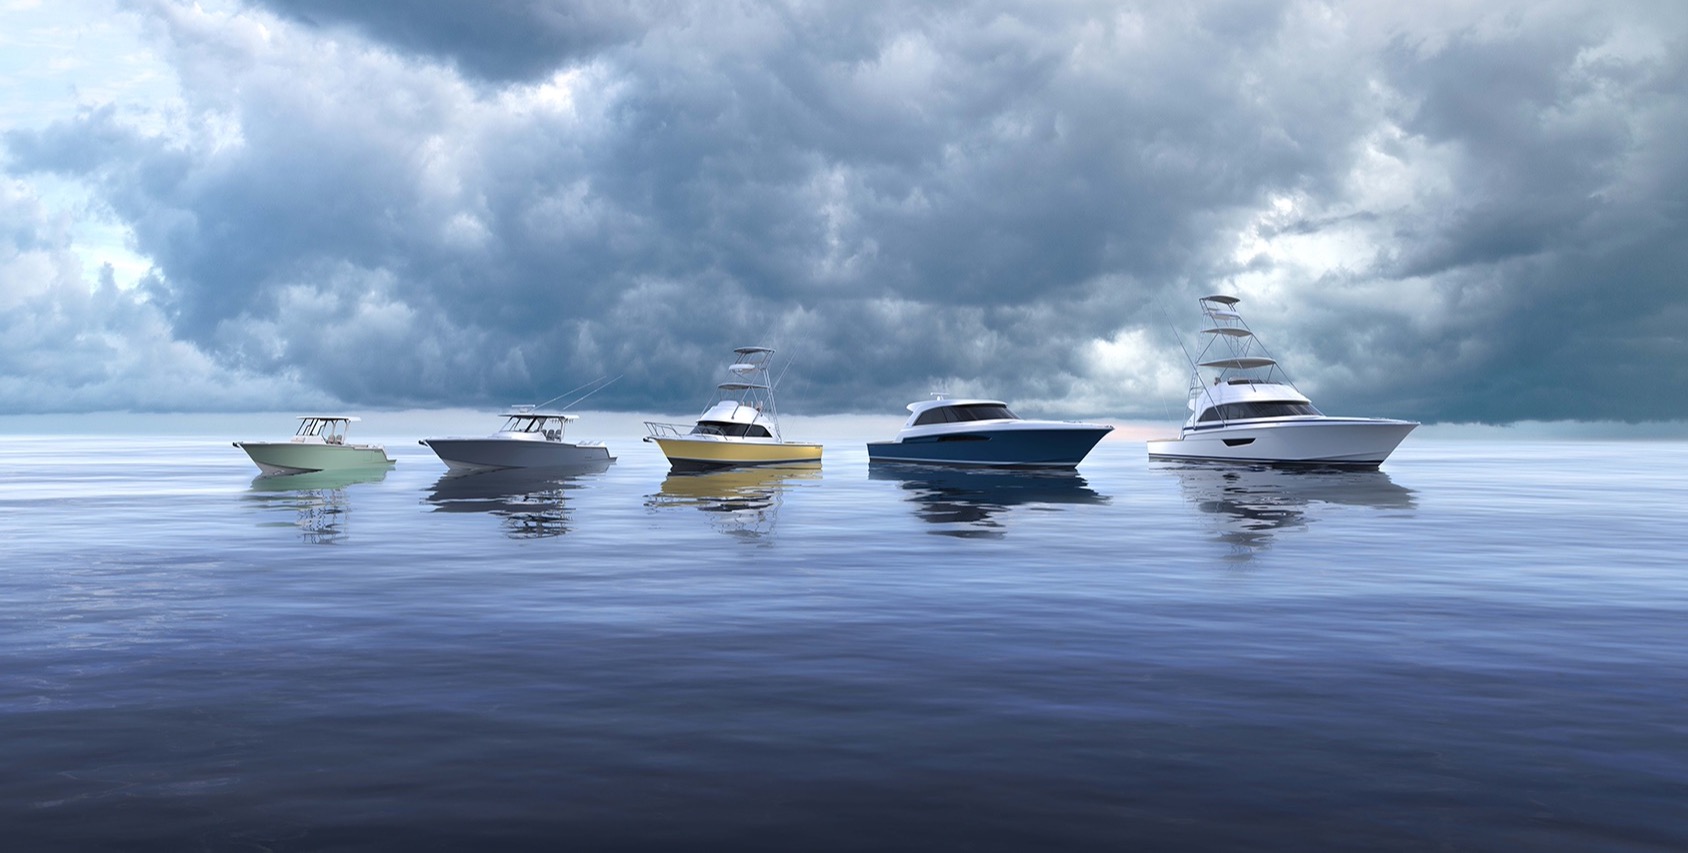 bertram yachts marketing